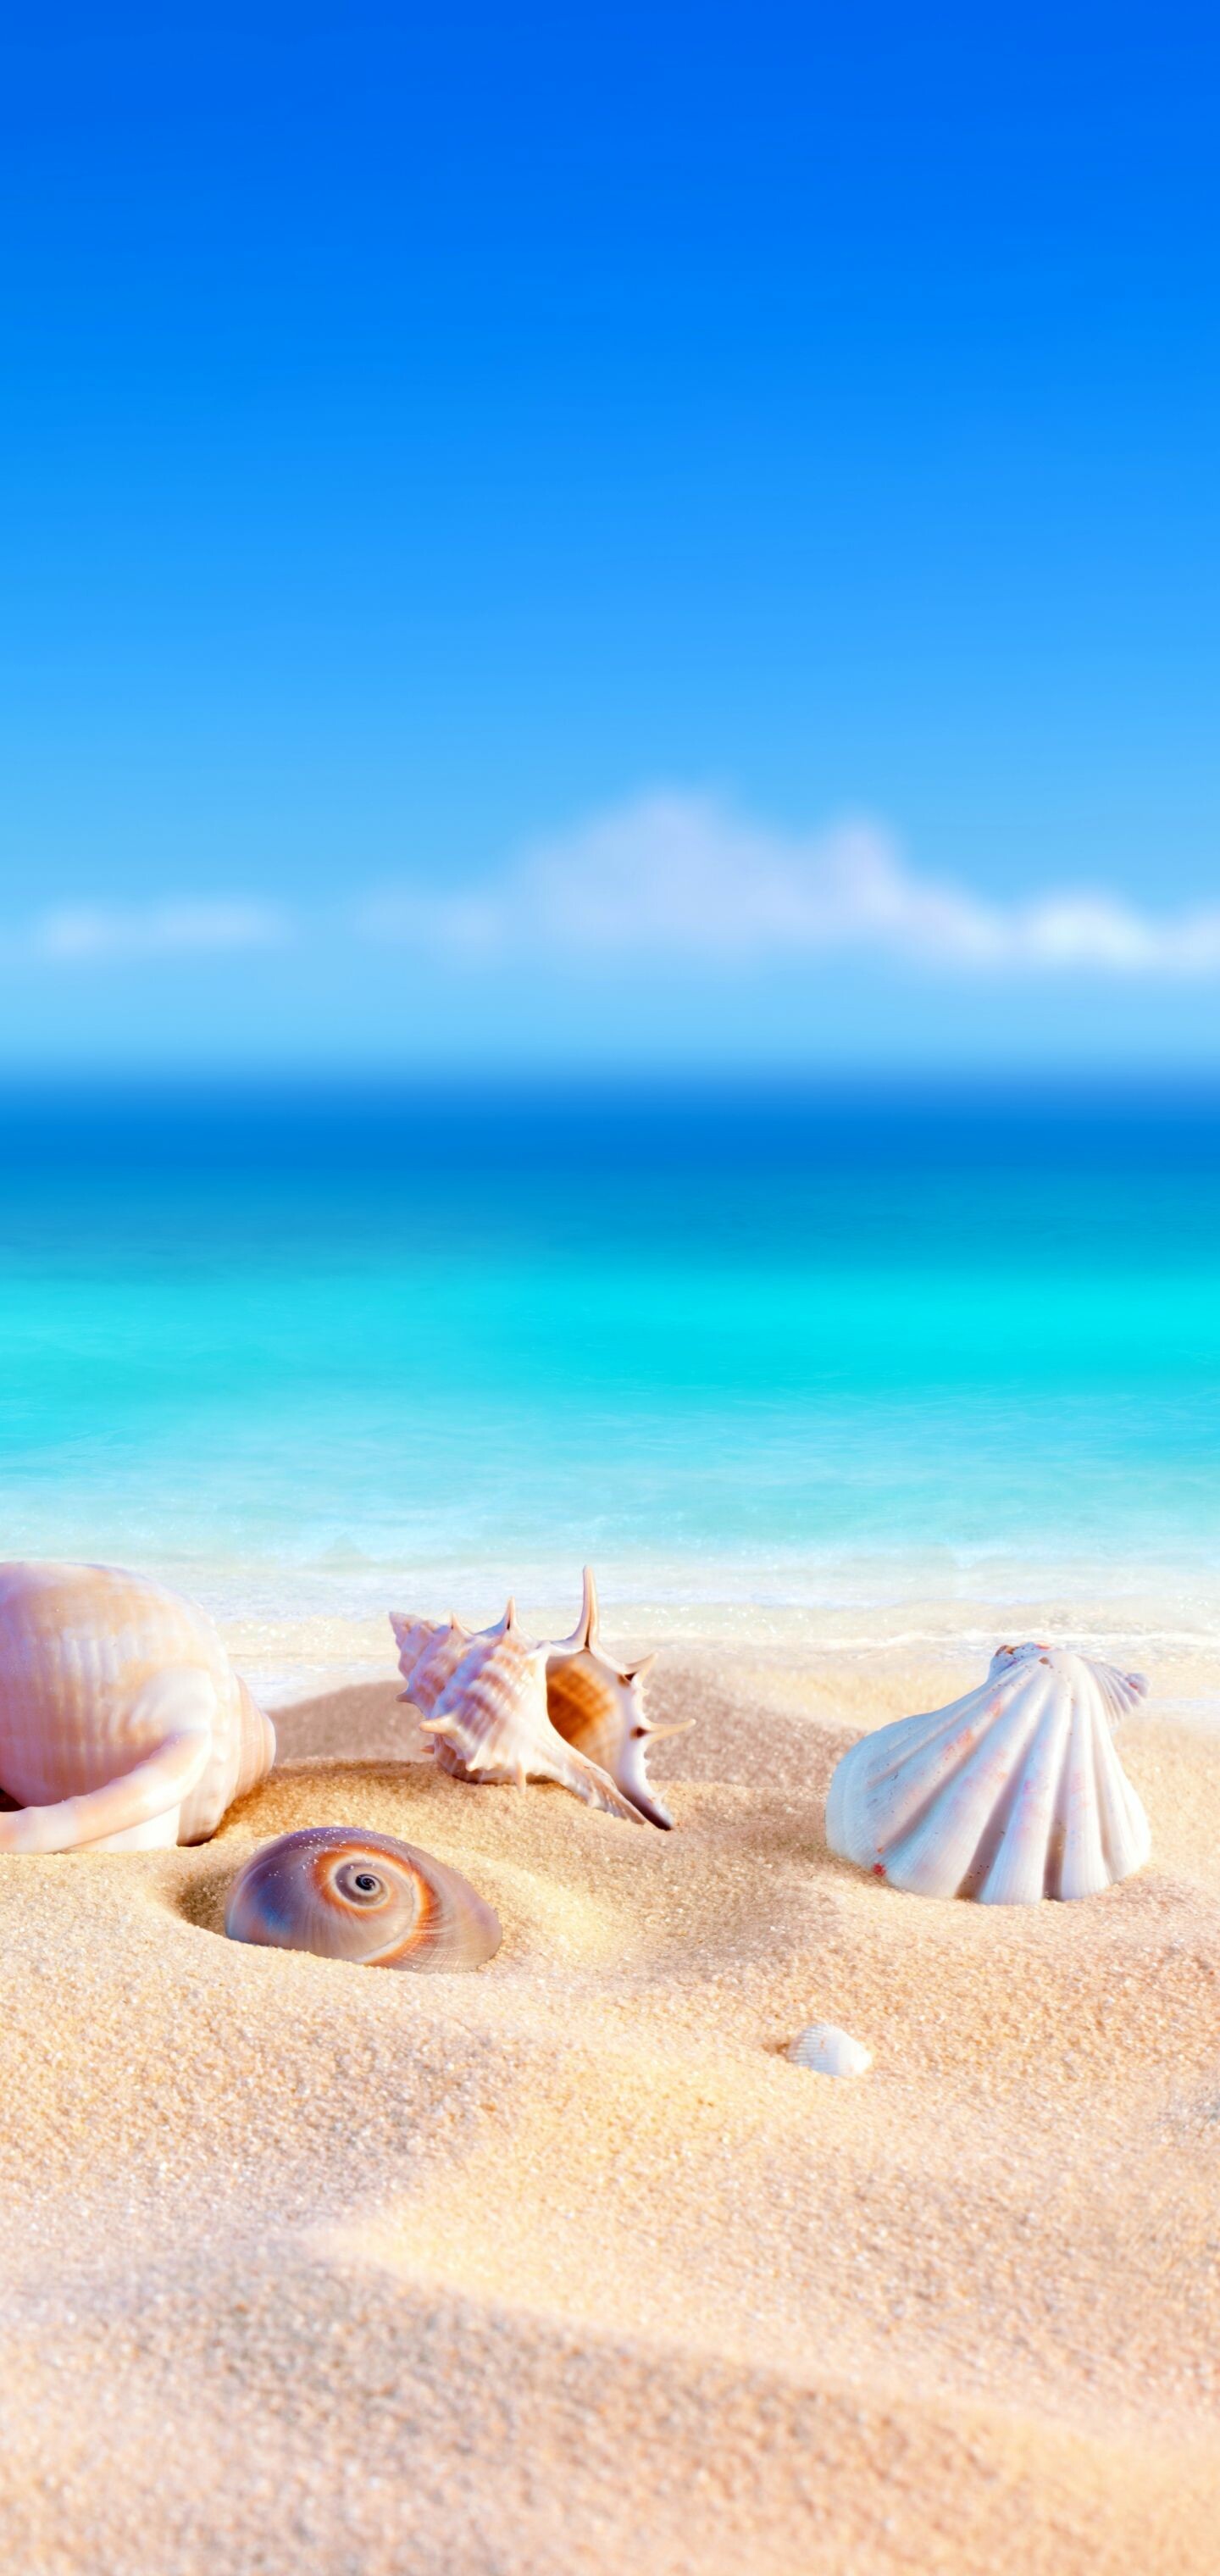 Summer: The hottest season, Holiday destinations. 1440x3040 HD Wallpaper.